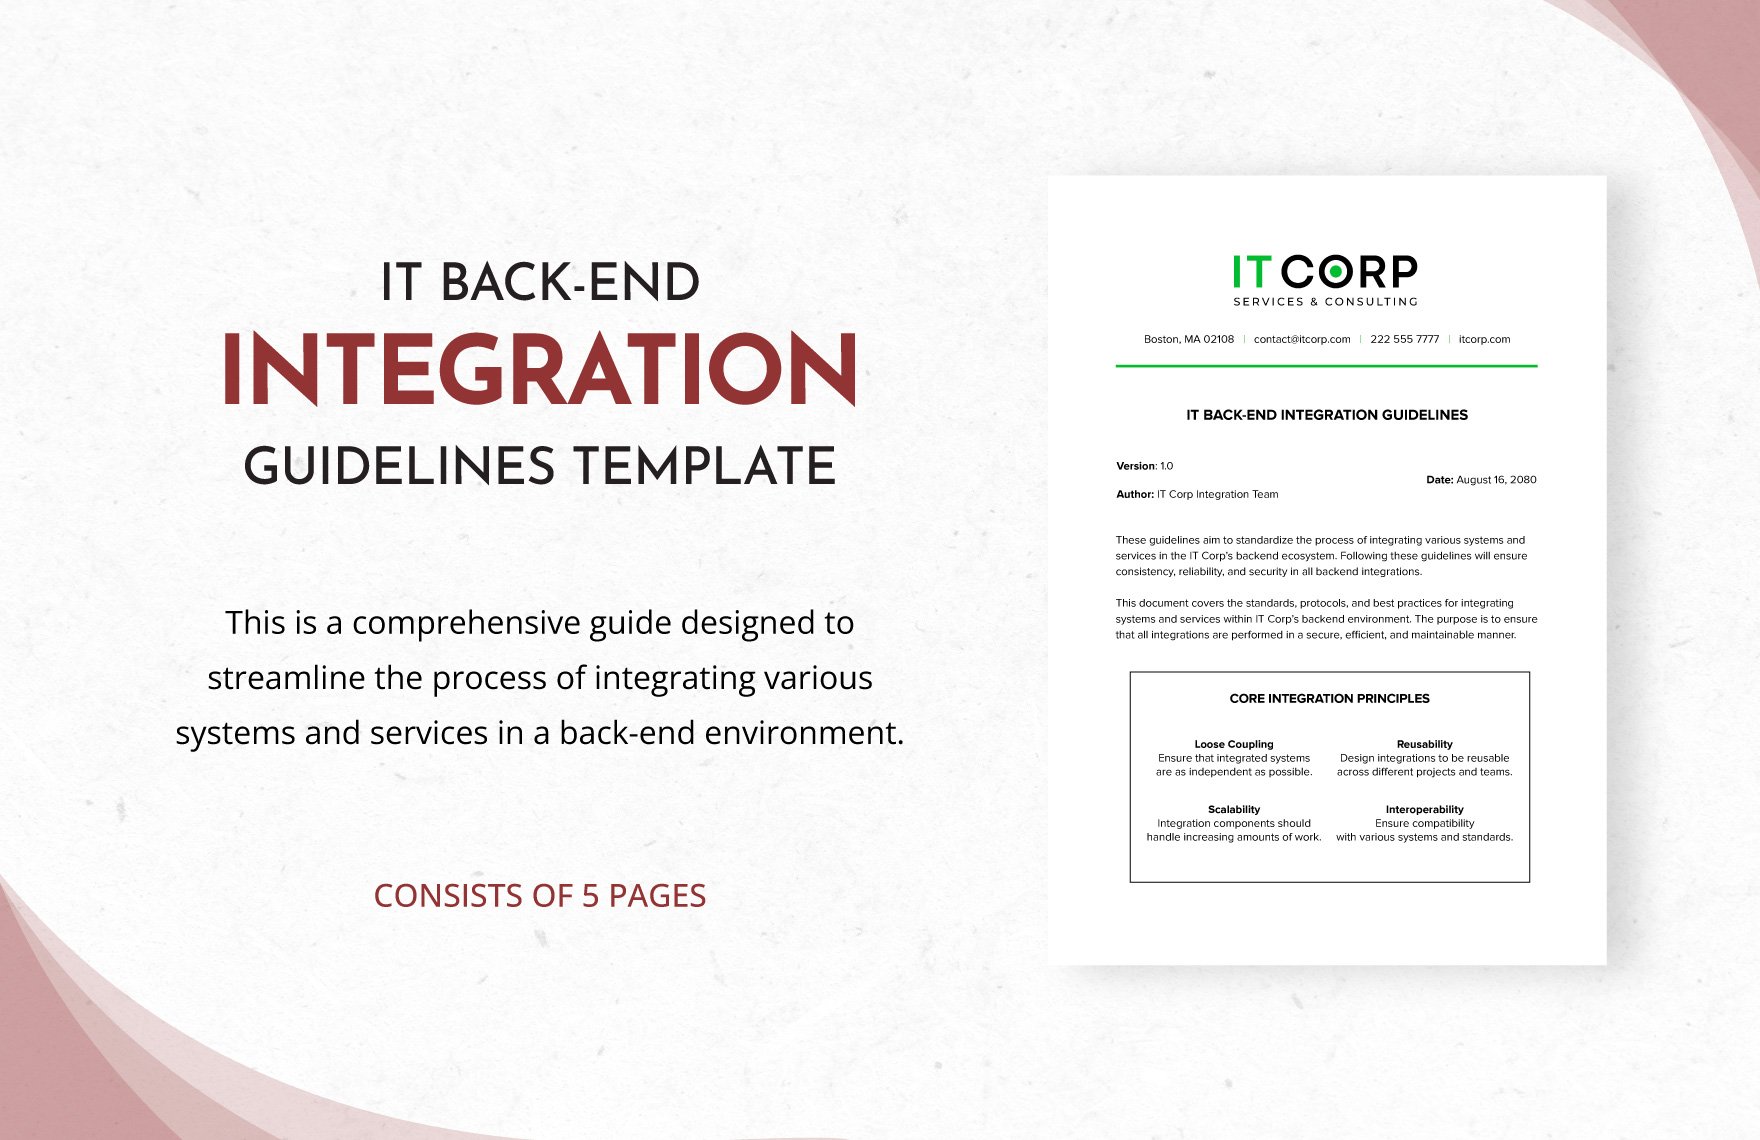 IT Back-End Integration Guidelines Template